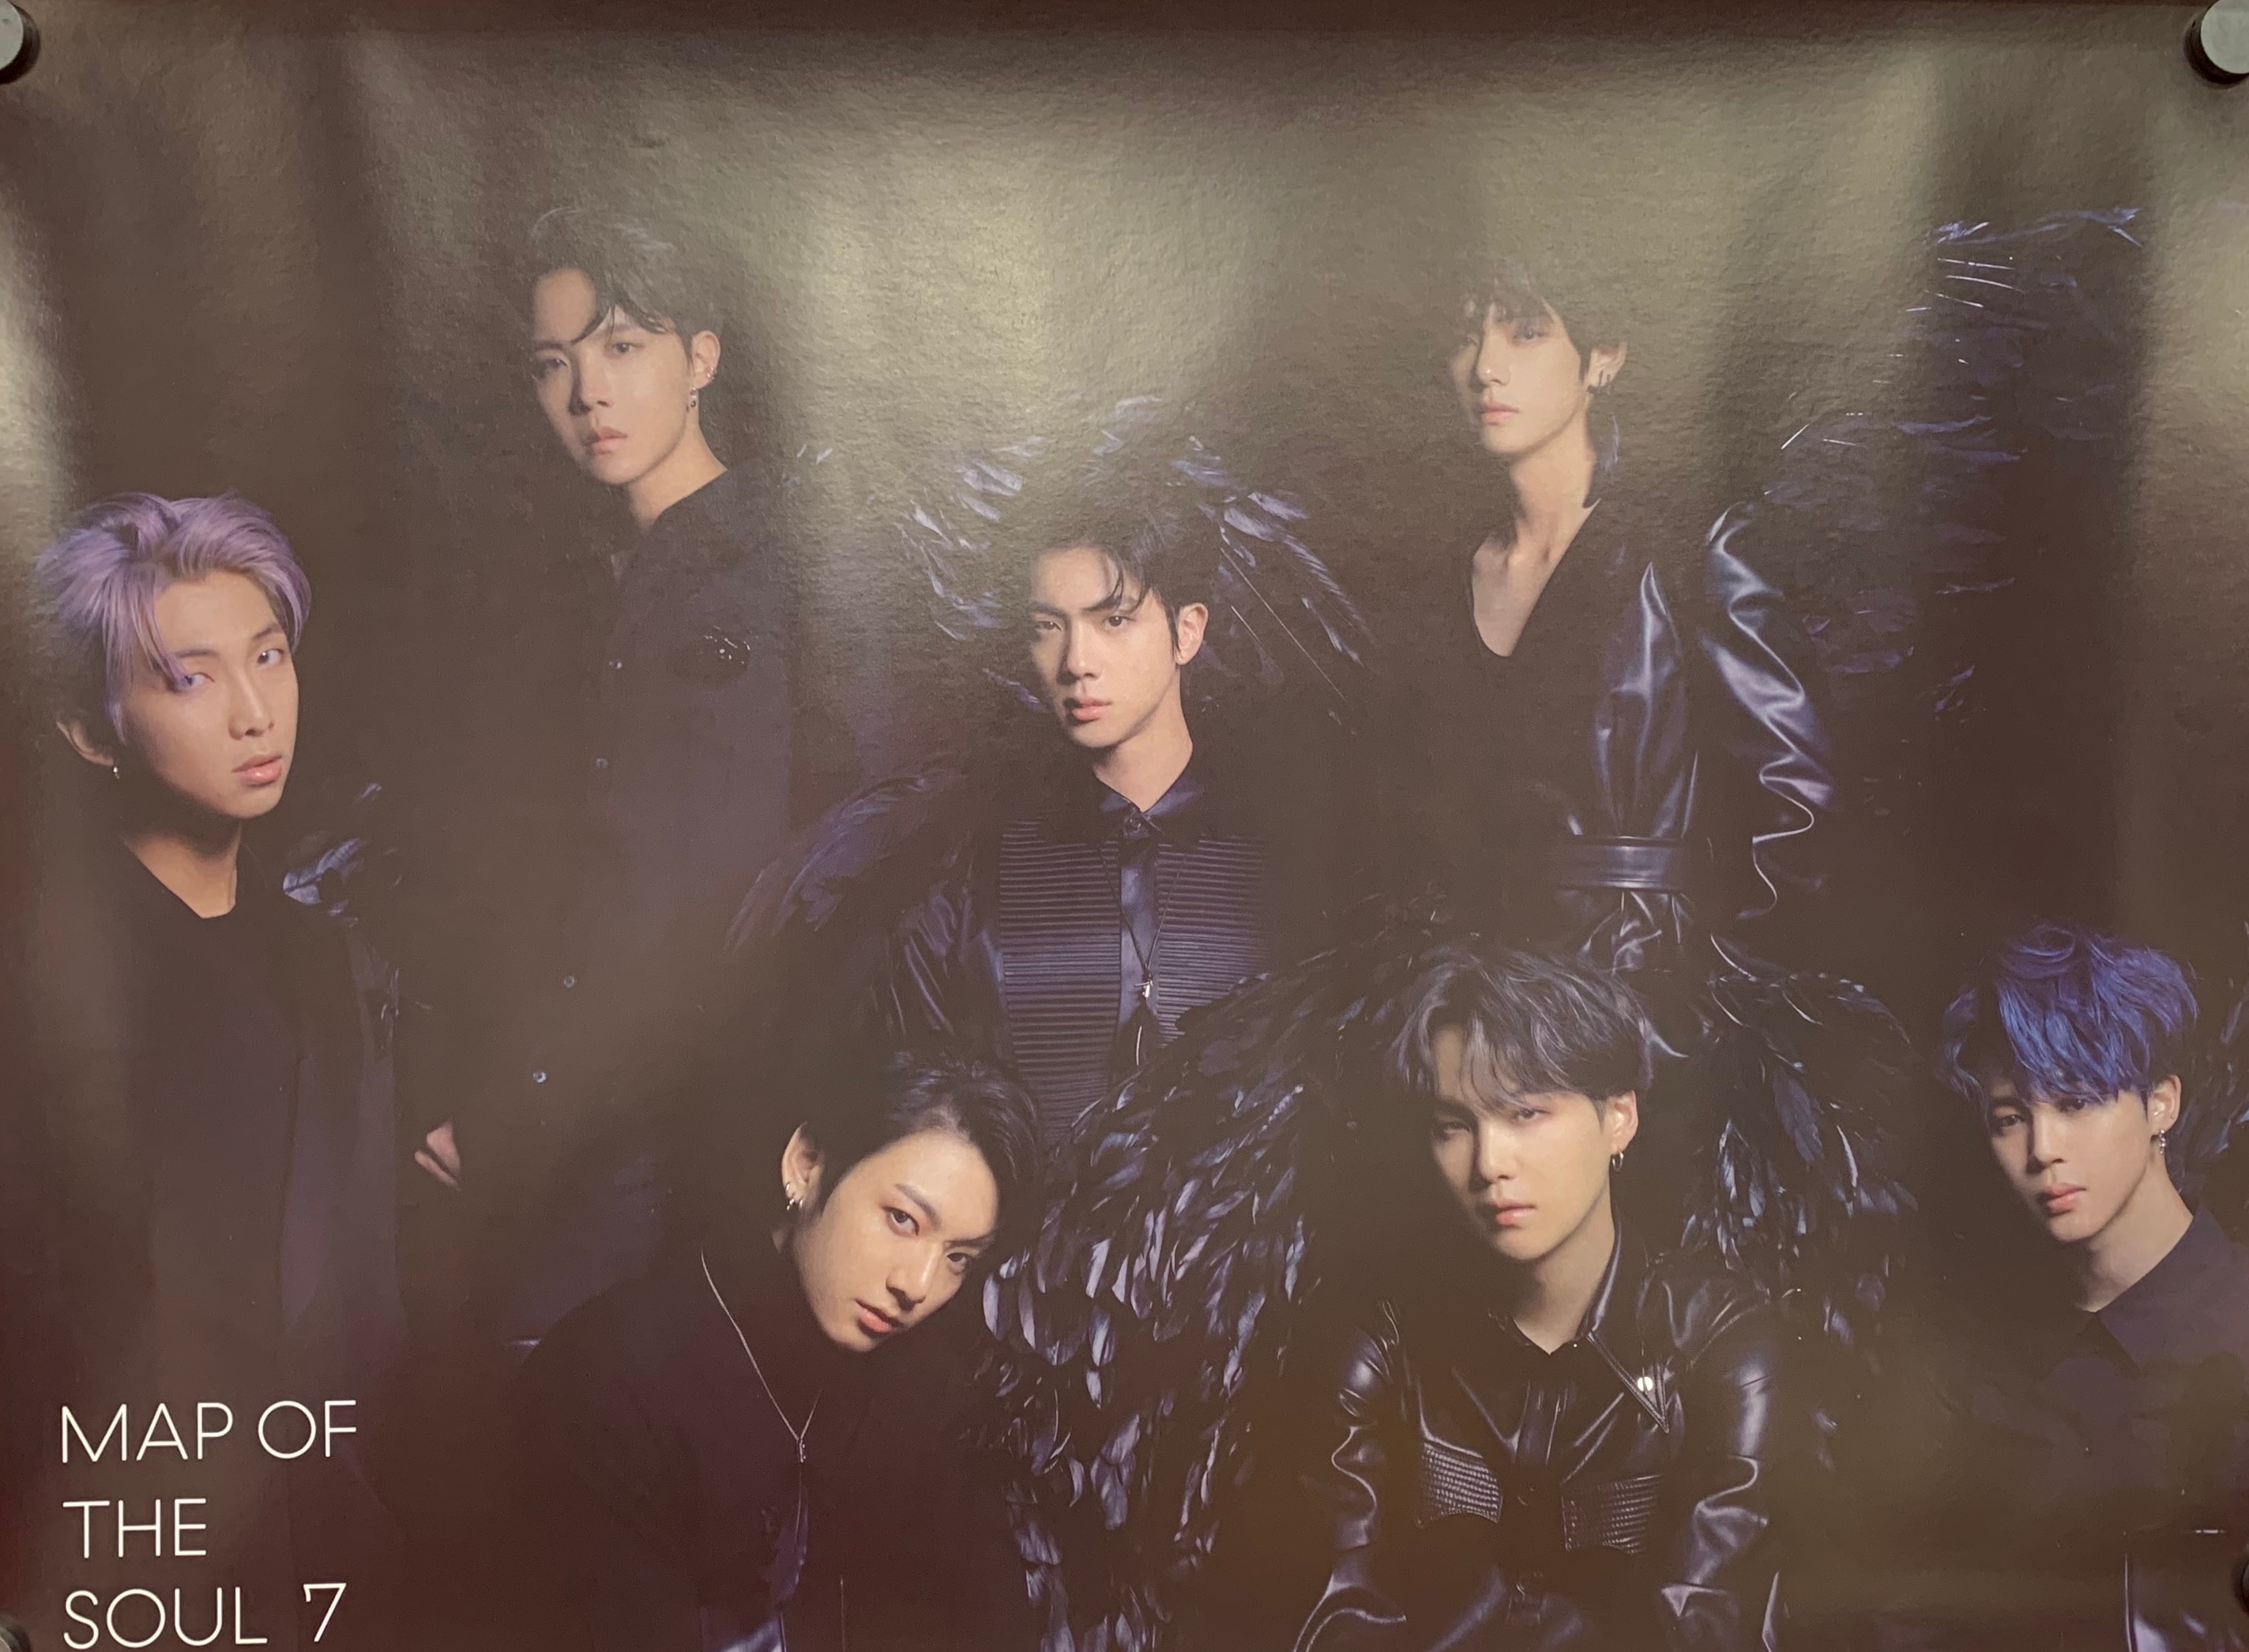 BTS MAP OF THE SOUL_DVDの特典ポスター - K-POP/アジア